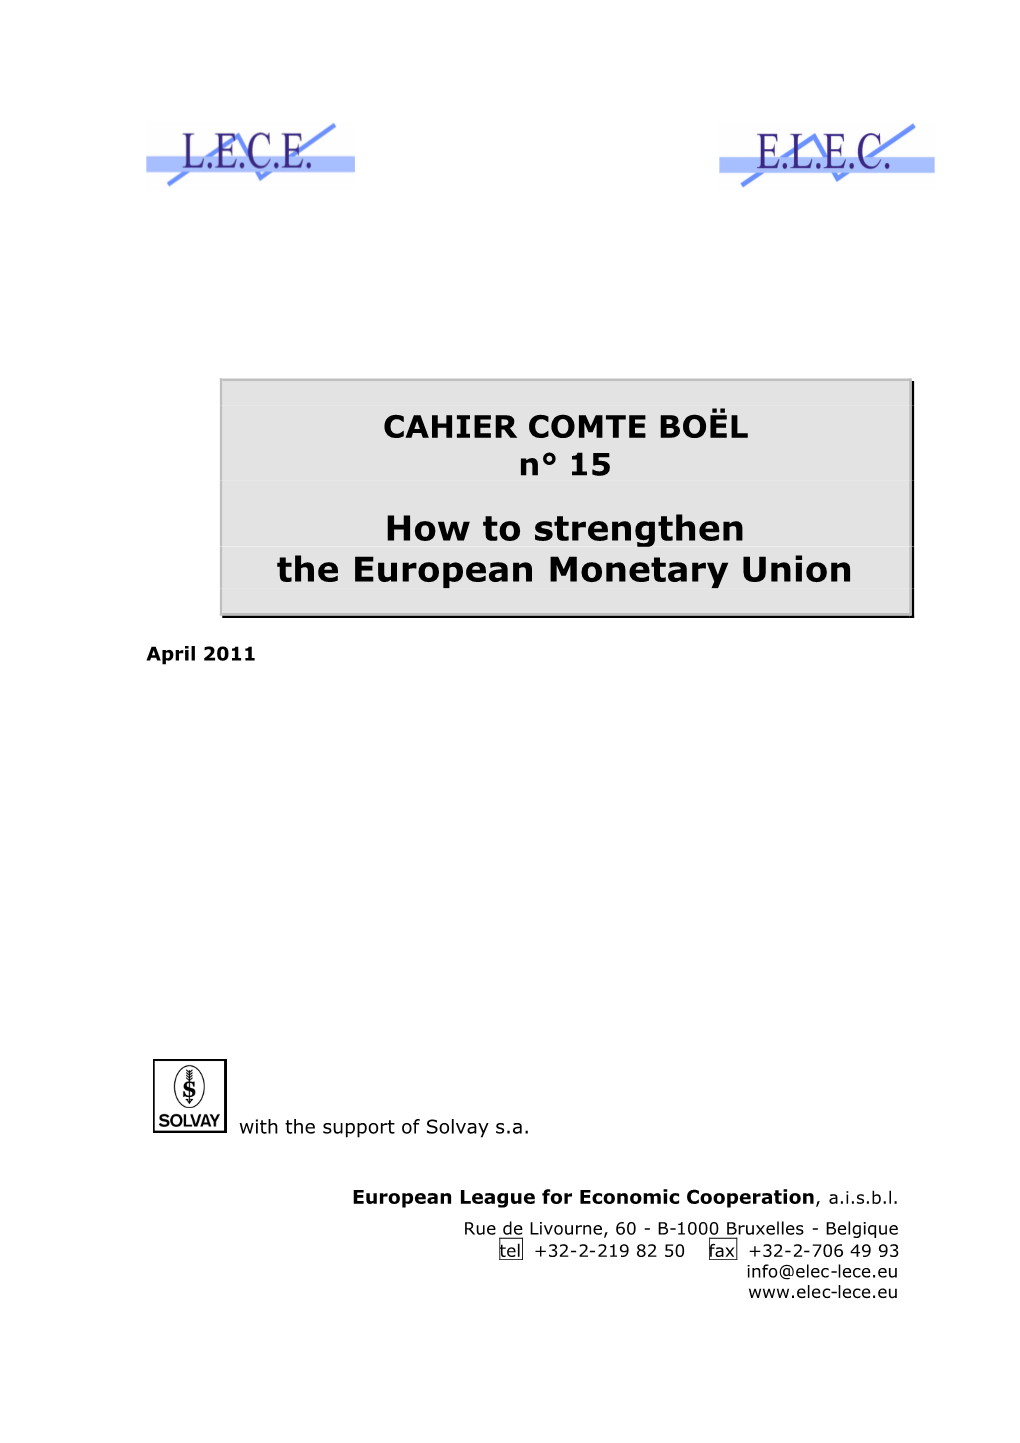 How to Strengthen the European Monetary Union